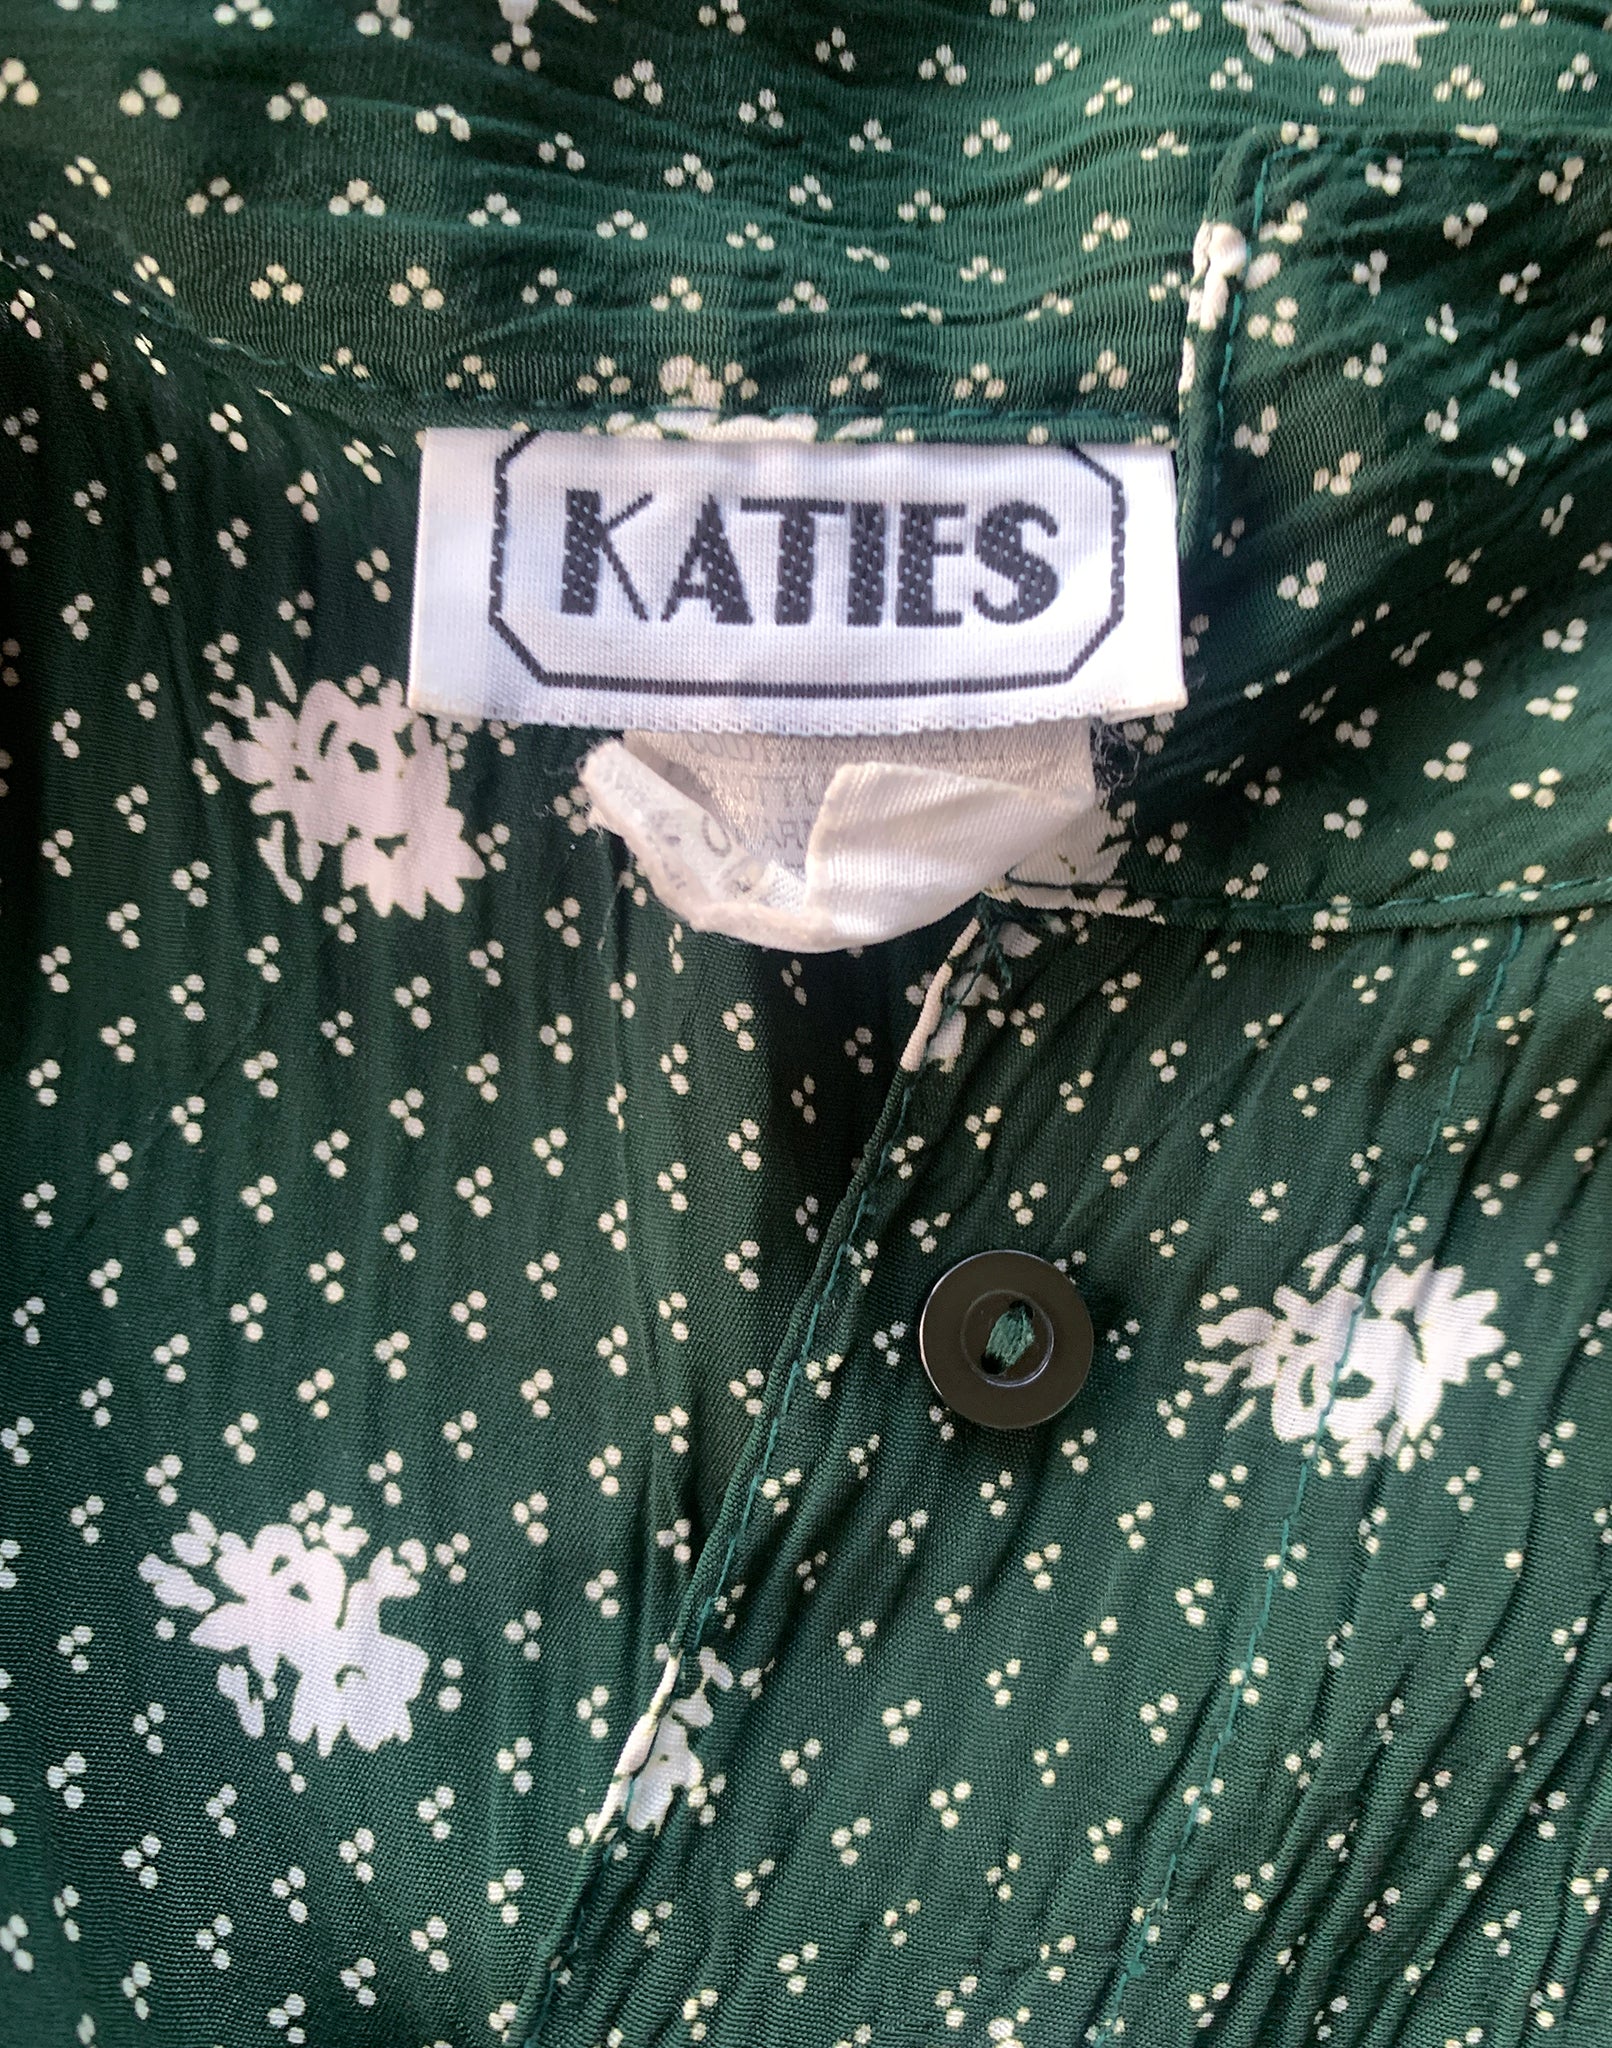 Vintage 80's Katies Green Floral Blouse - Size M/ L